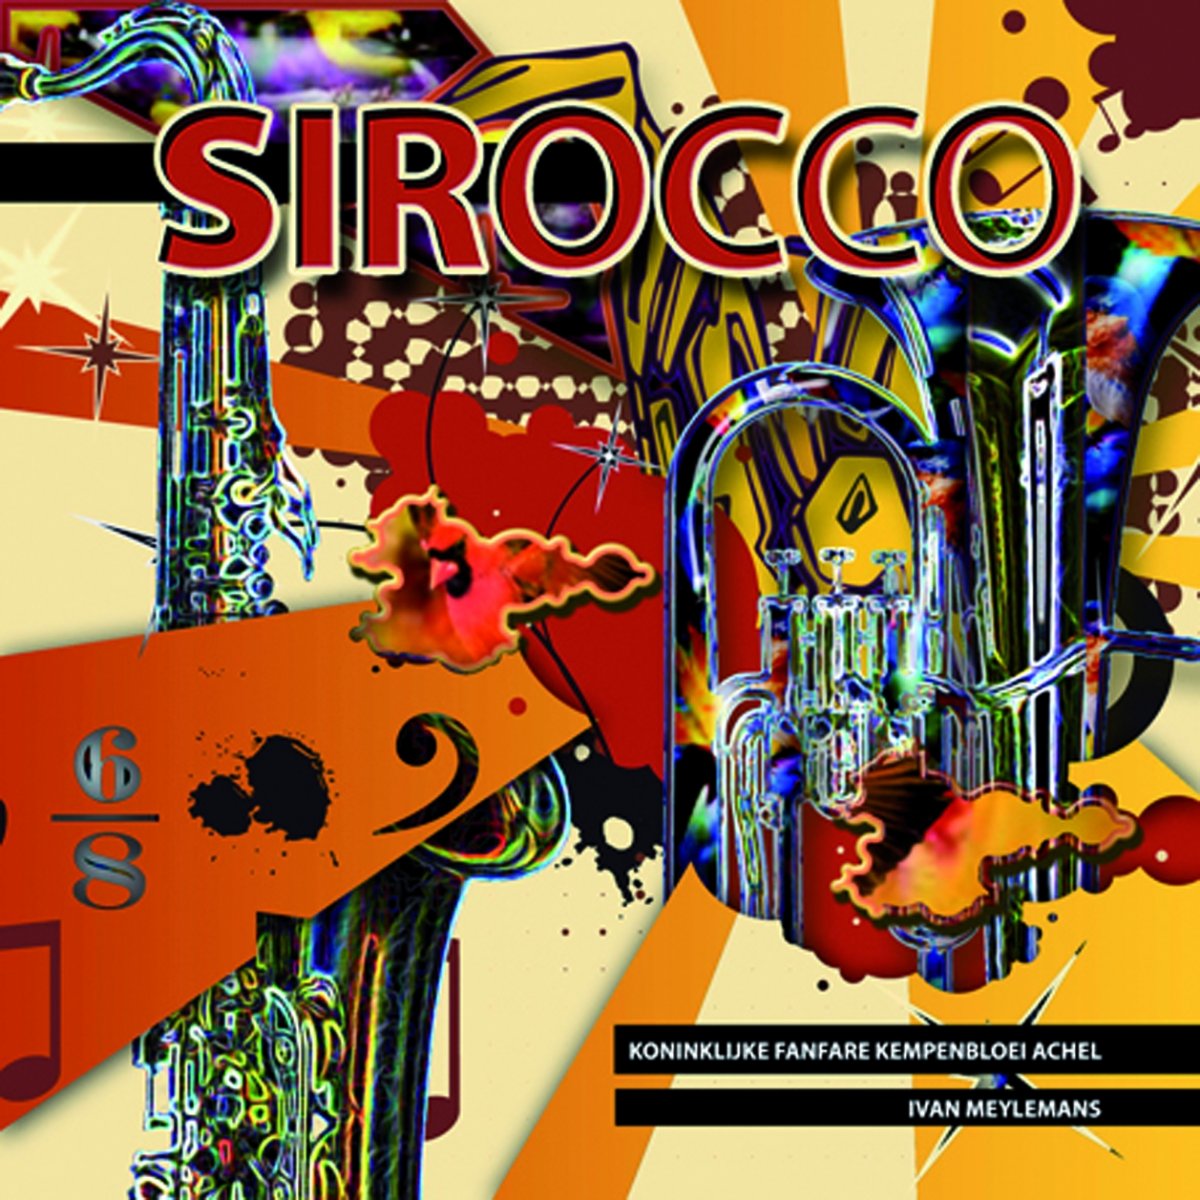 Sirocco - click here